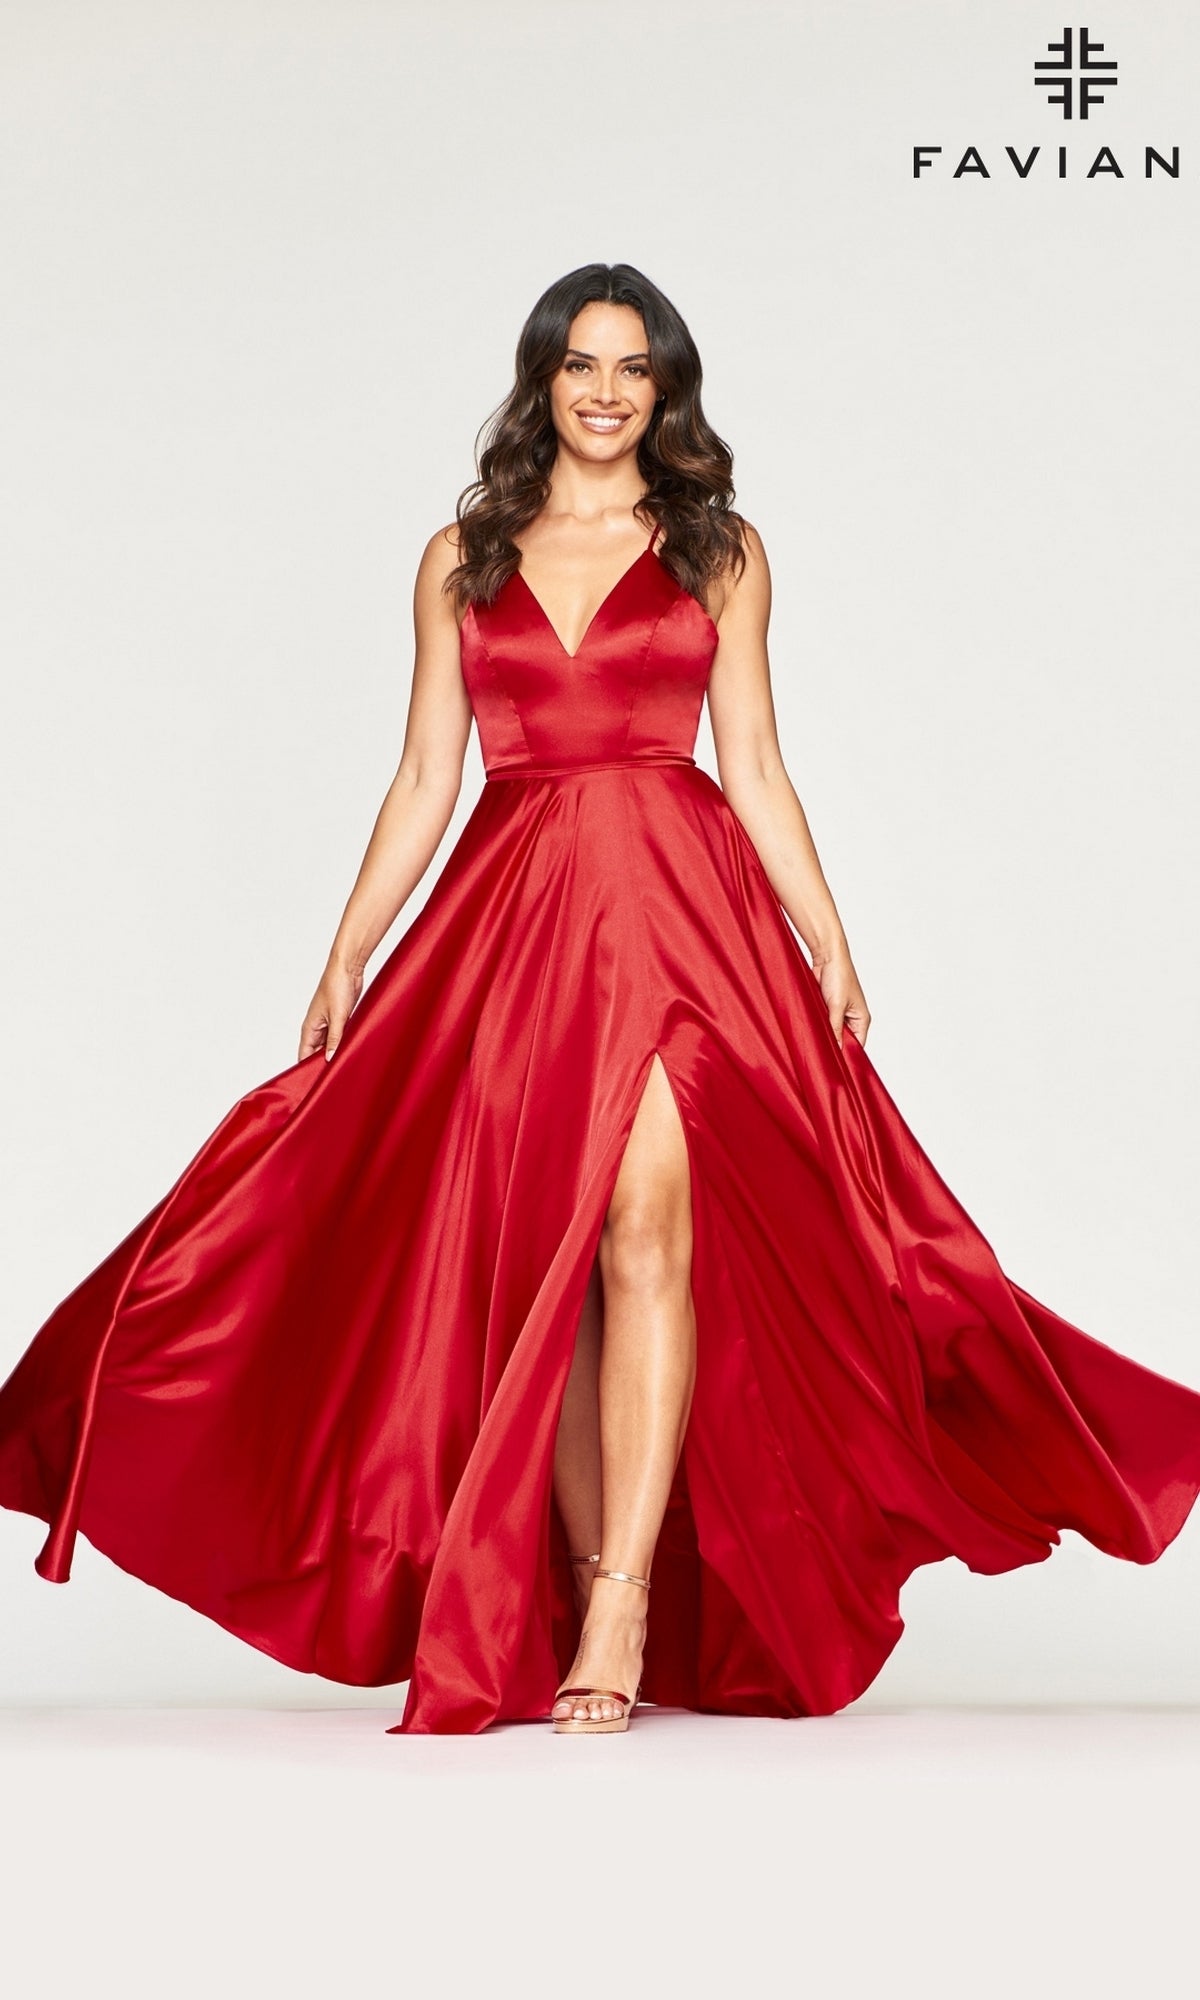  Long A-Line Faviana Formal Prom Dress with Pockets